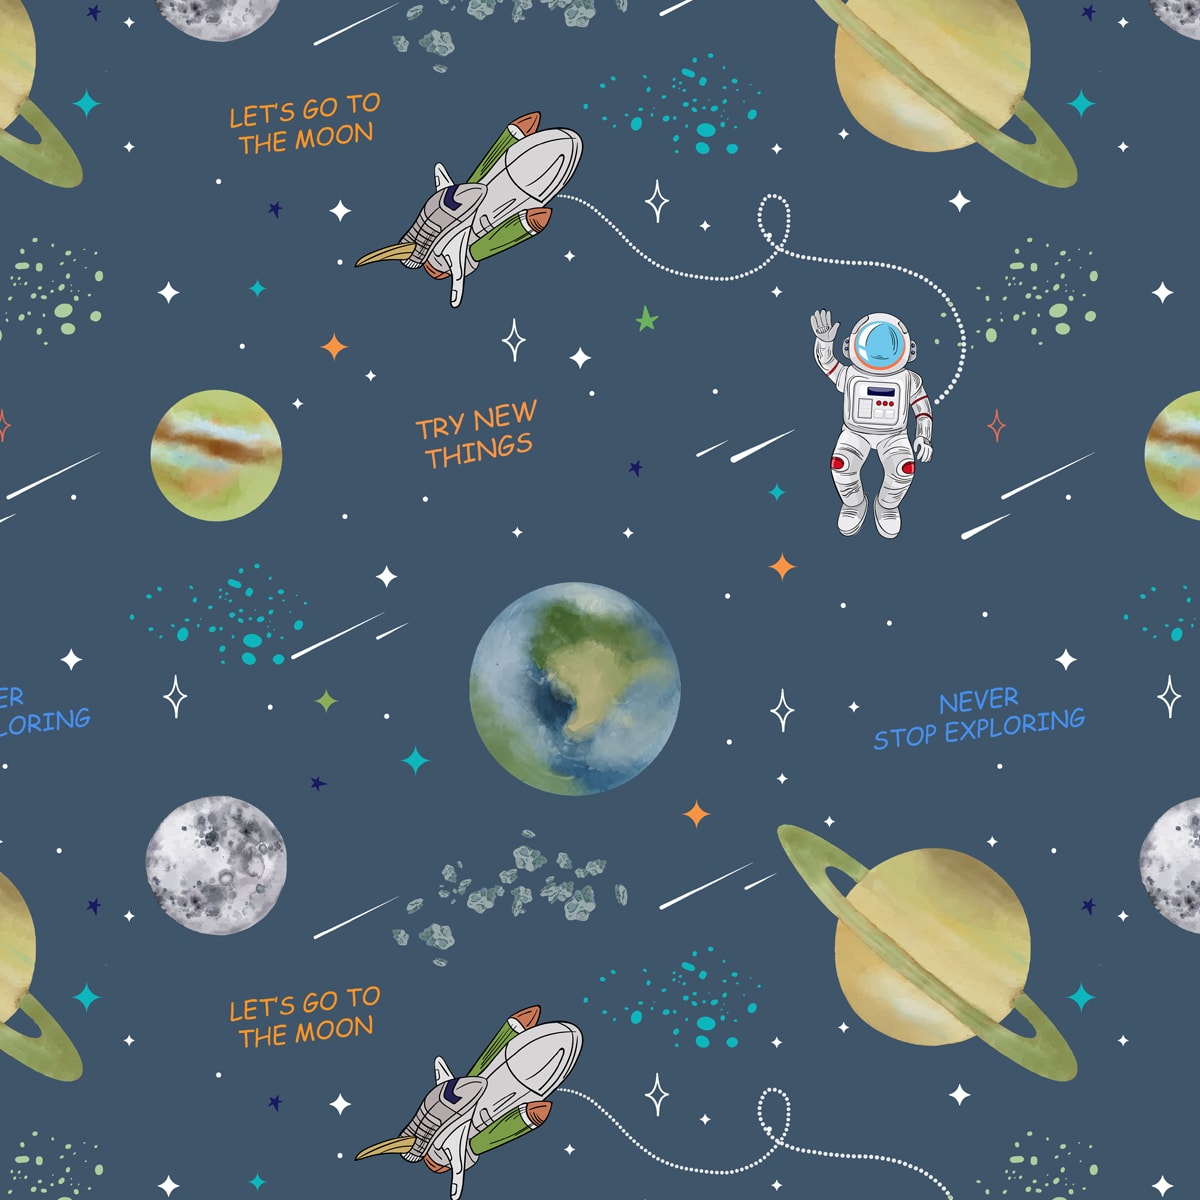 Copy of Planets of Wonder: Stellar Space Wallpaper, Deep Blue